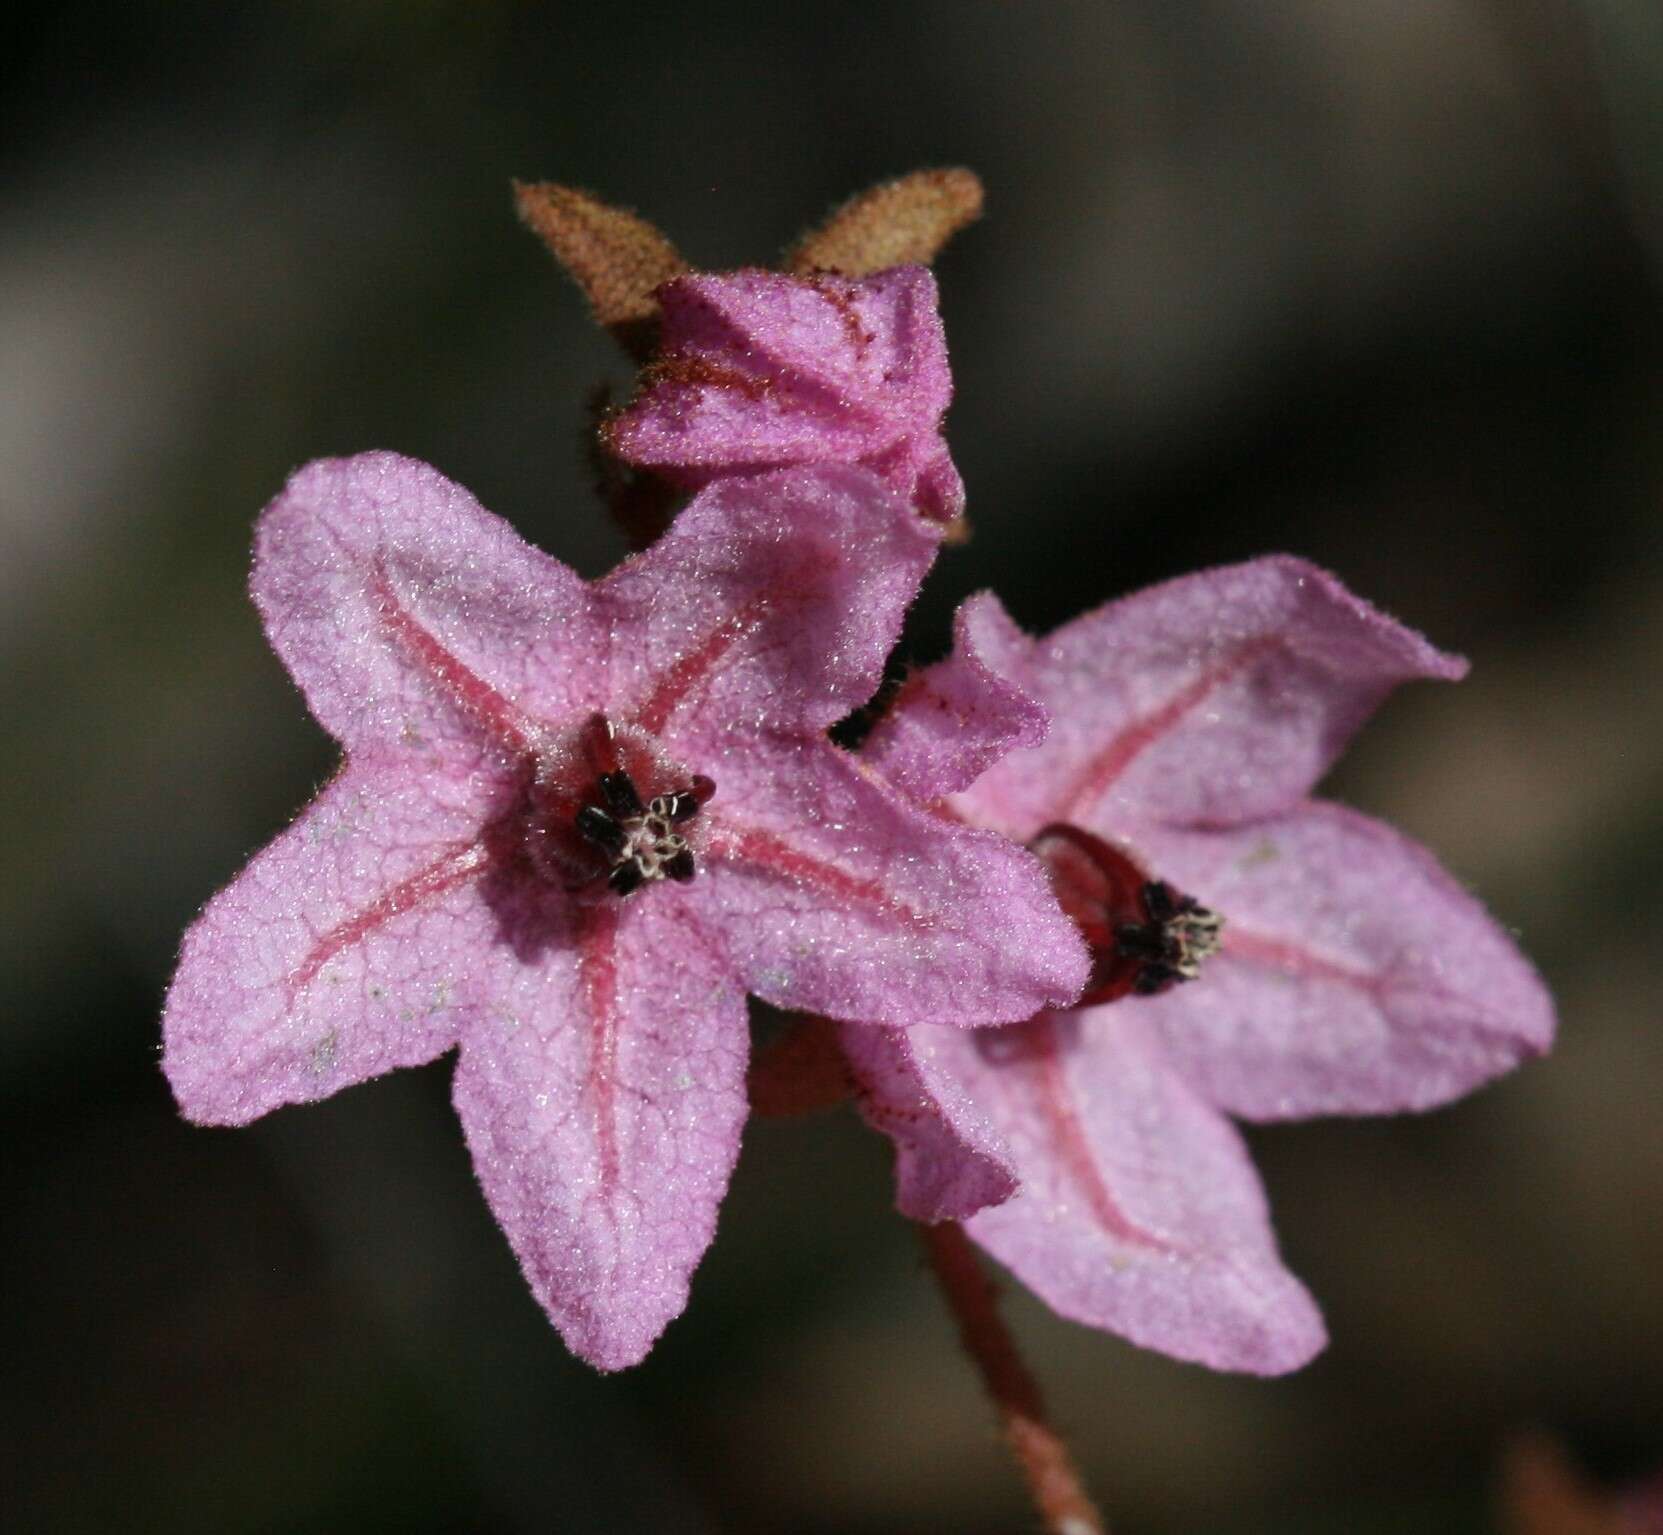 Image of Thomasia angustifolia Steud.